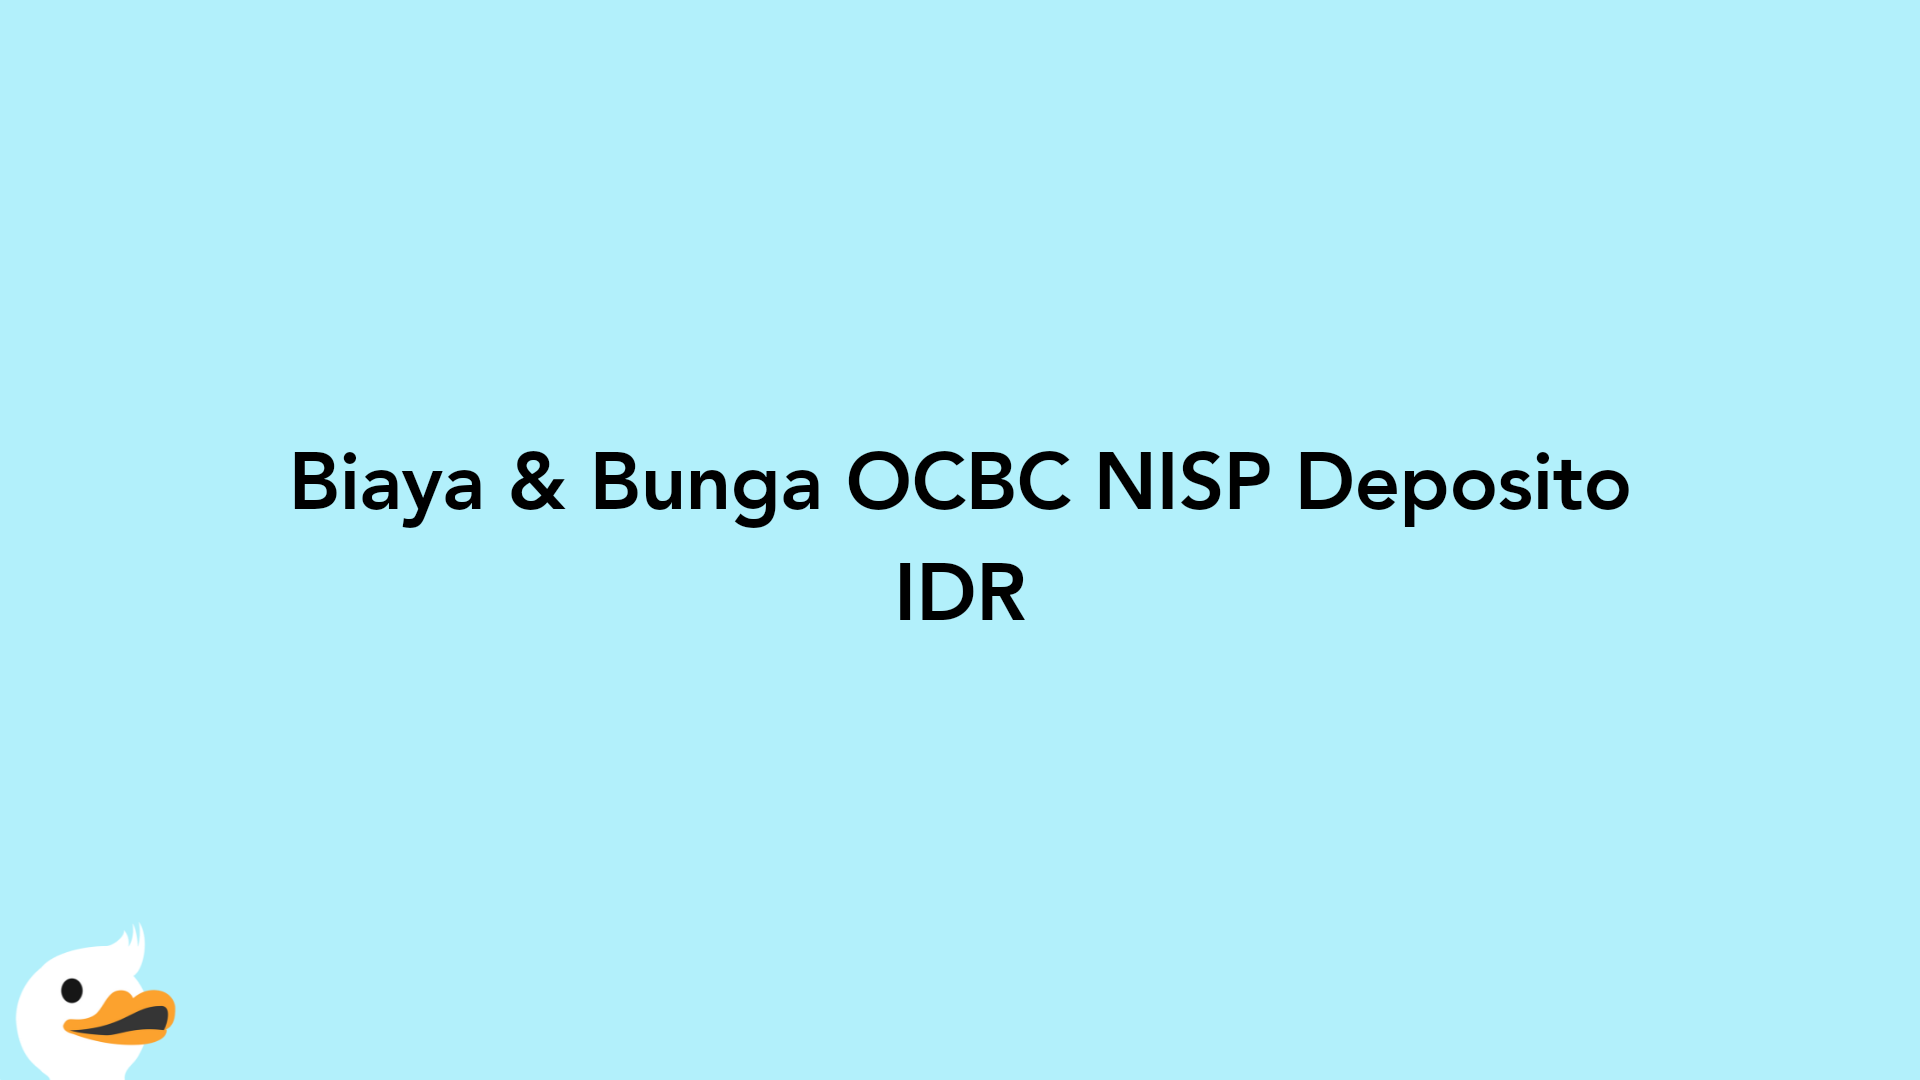 Biaya & Bunga OCBC NISP Deposito IDR